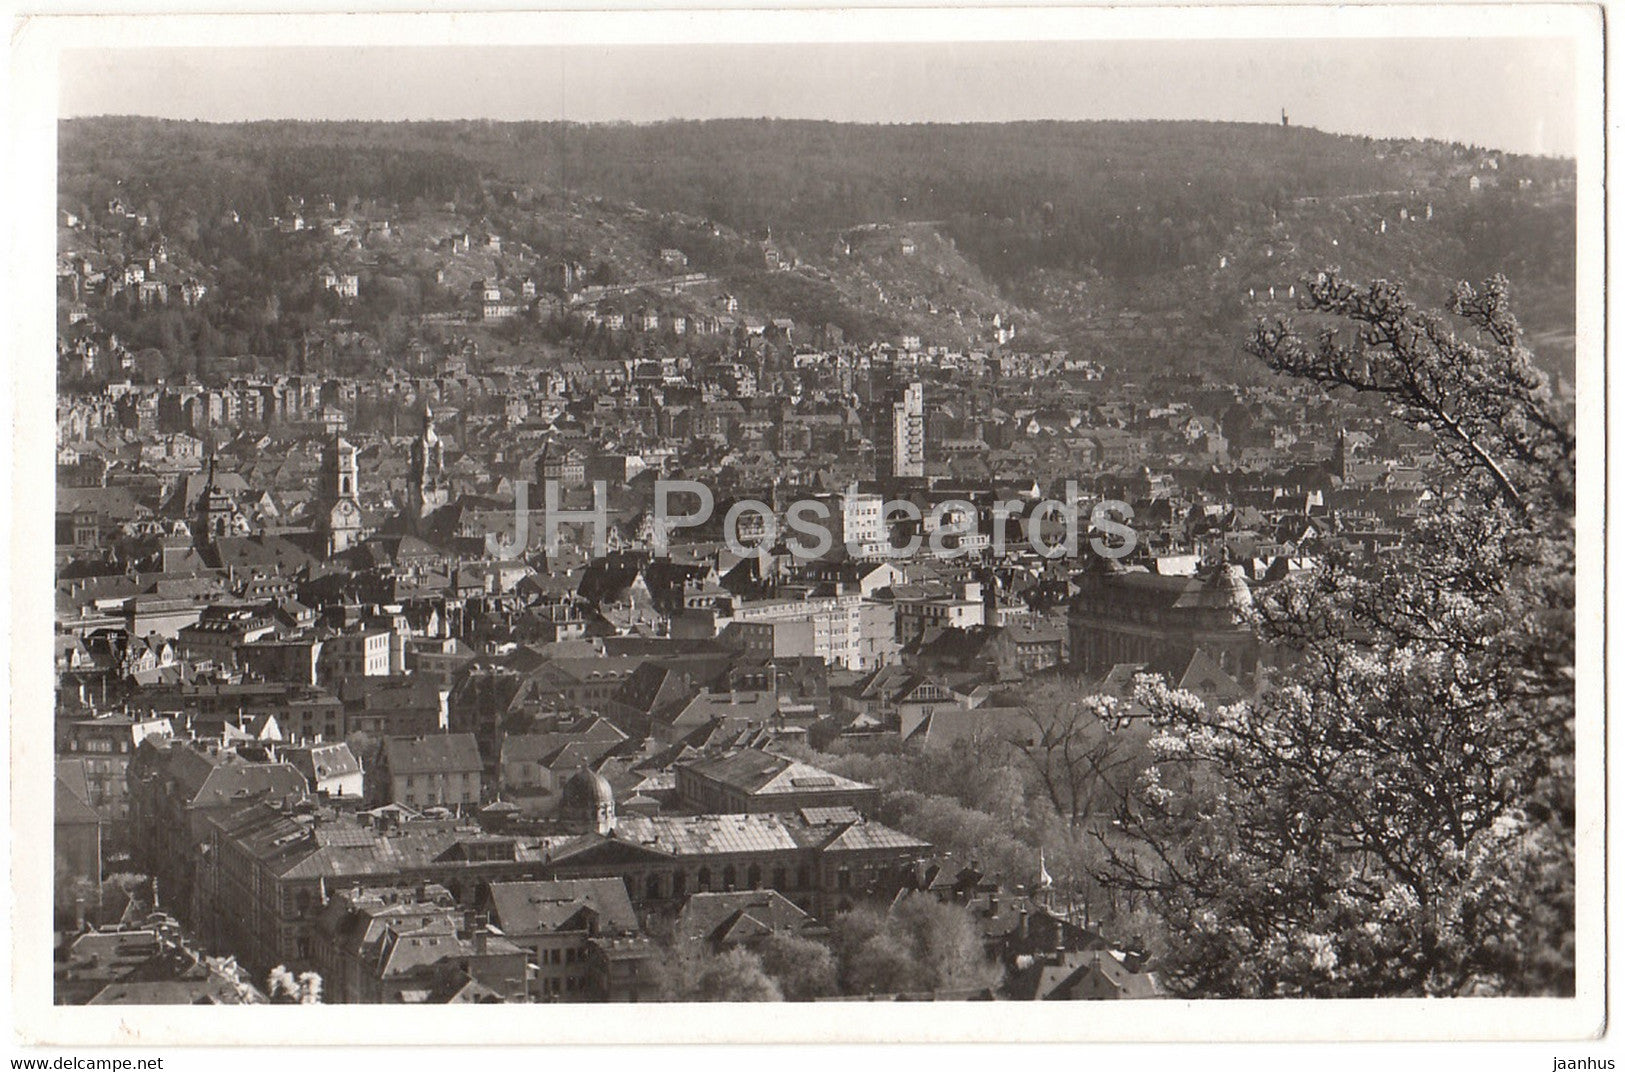 Stuttgart - old postcard - 1950 - Germany - used - JH Postcards